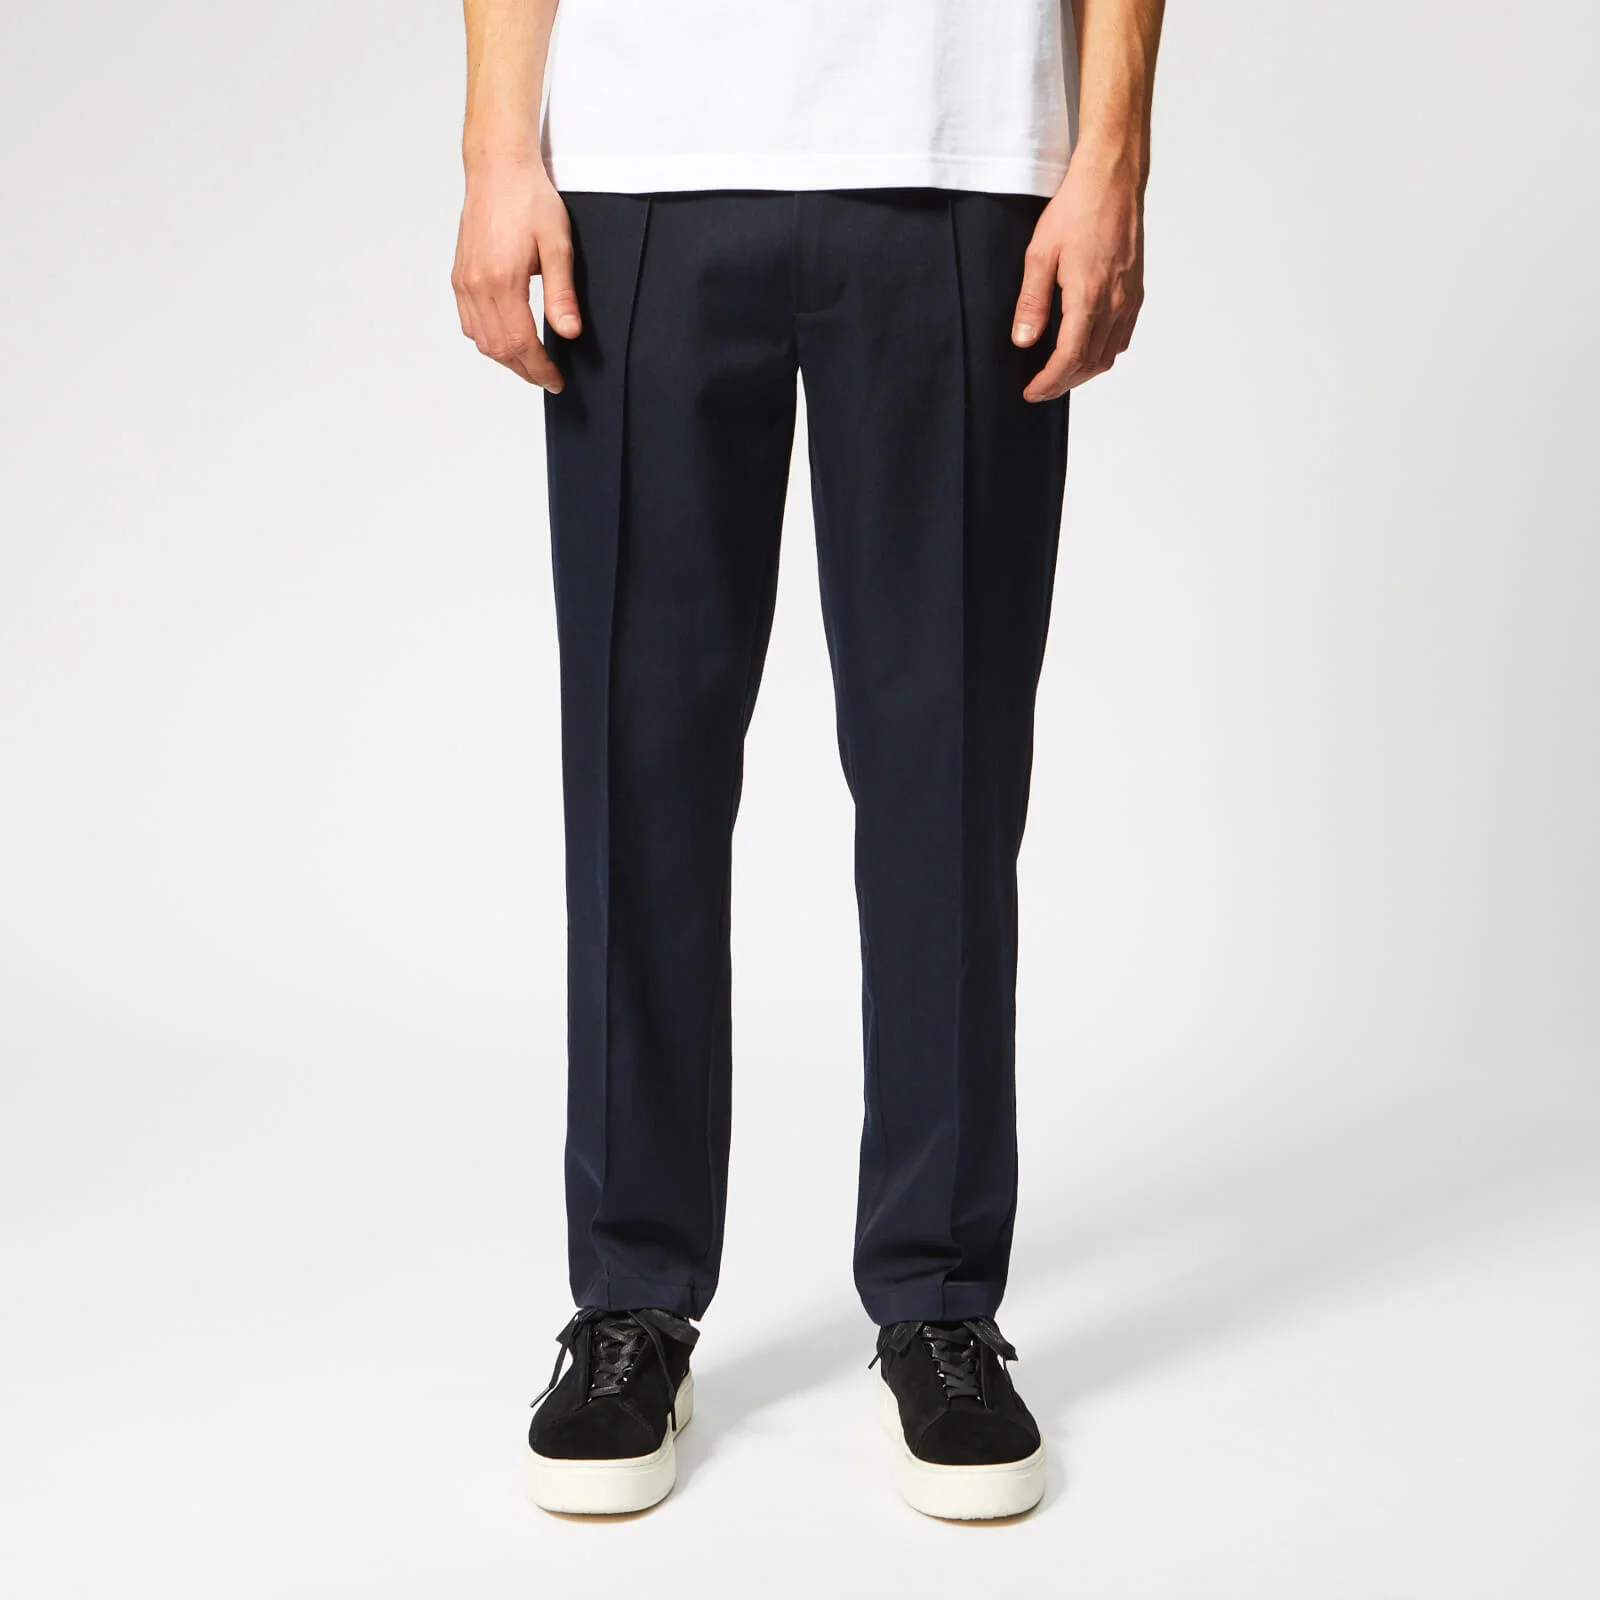 Axel Arigato Men's Slim Fit Trousers - Navy Image 1